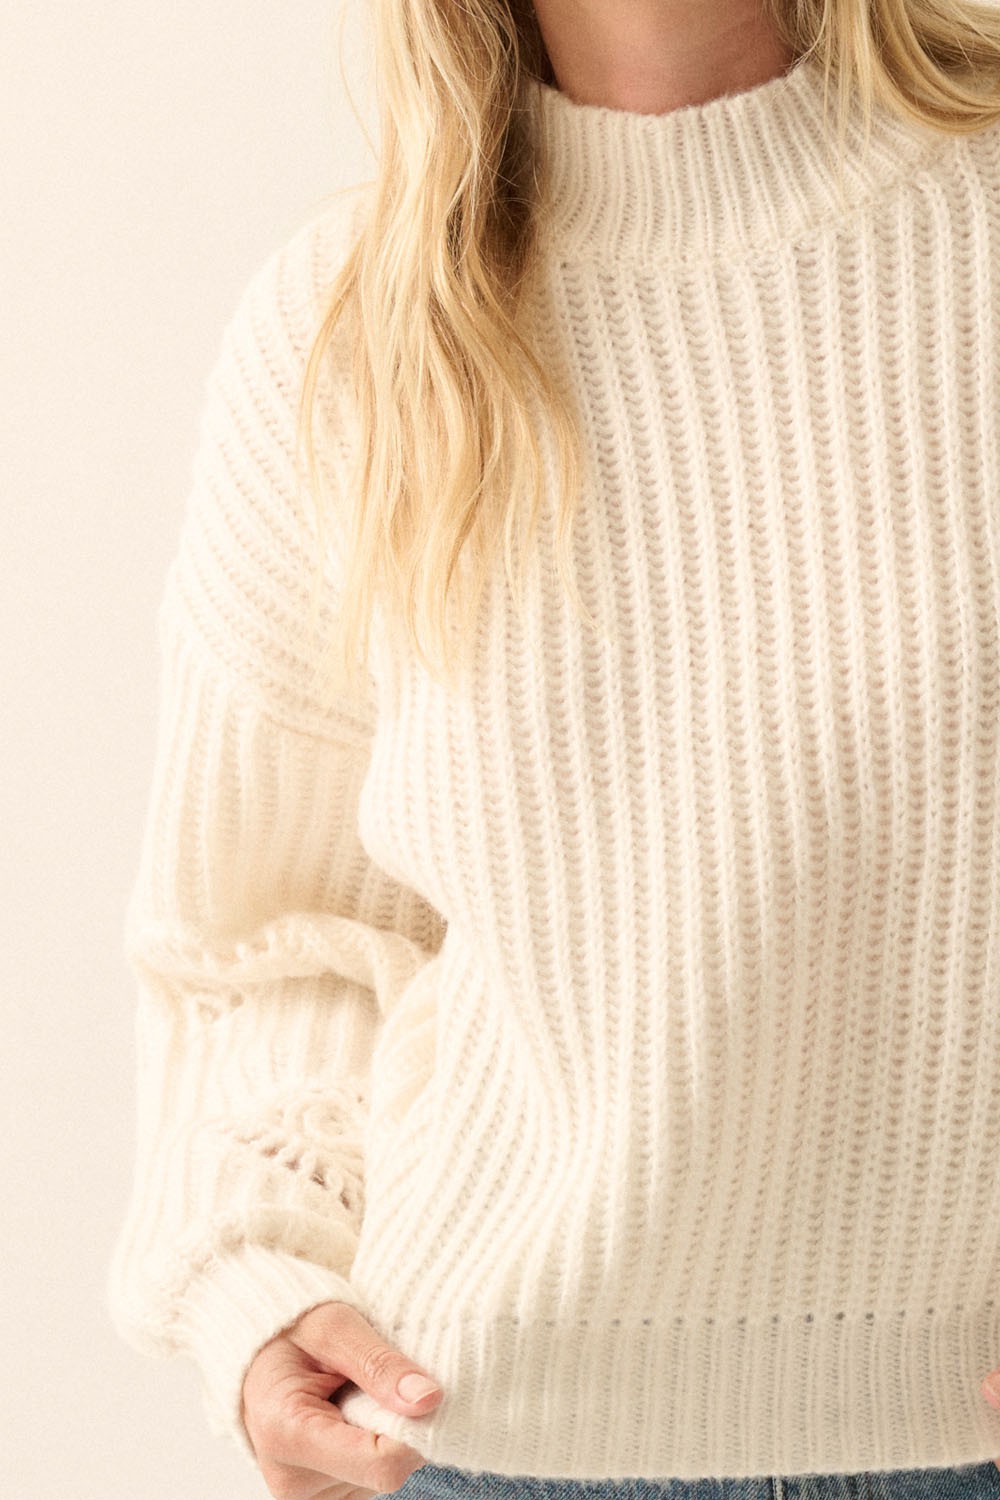 The Celeste Eyelet Detail Knit Sweater